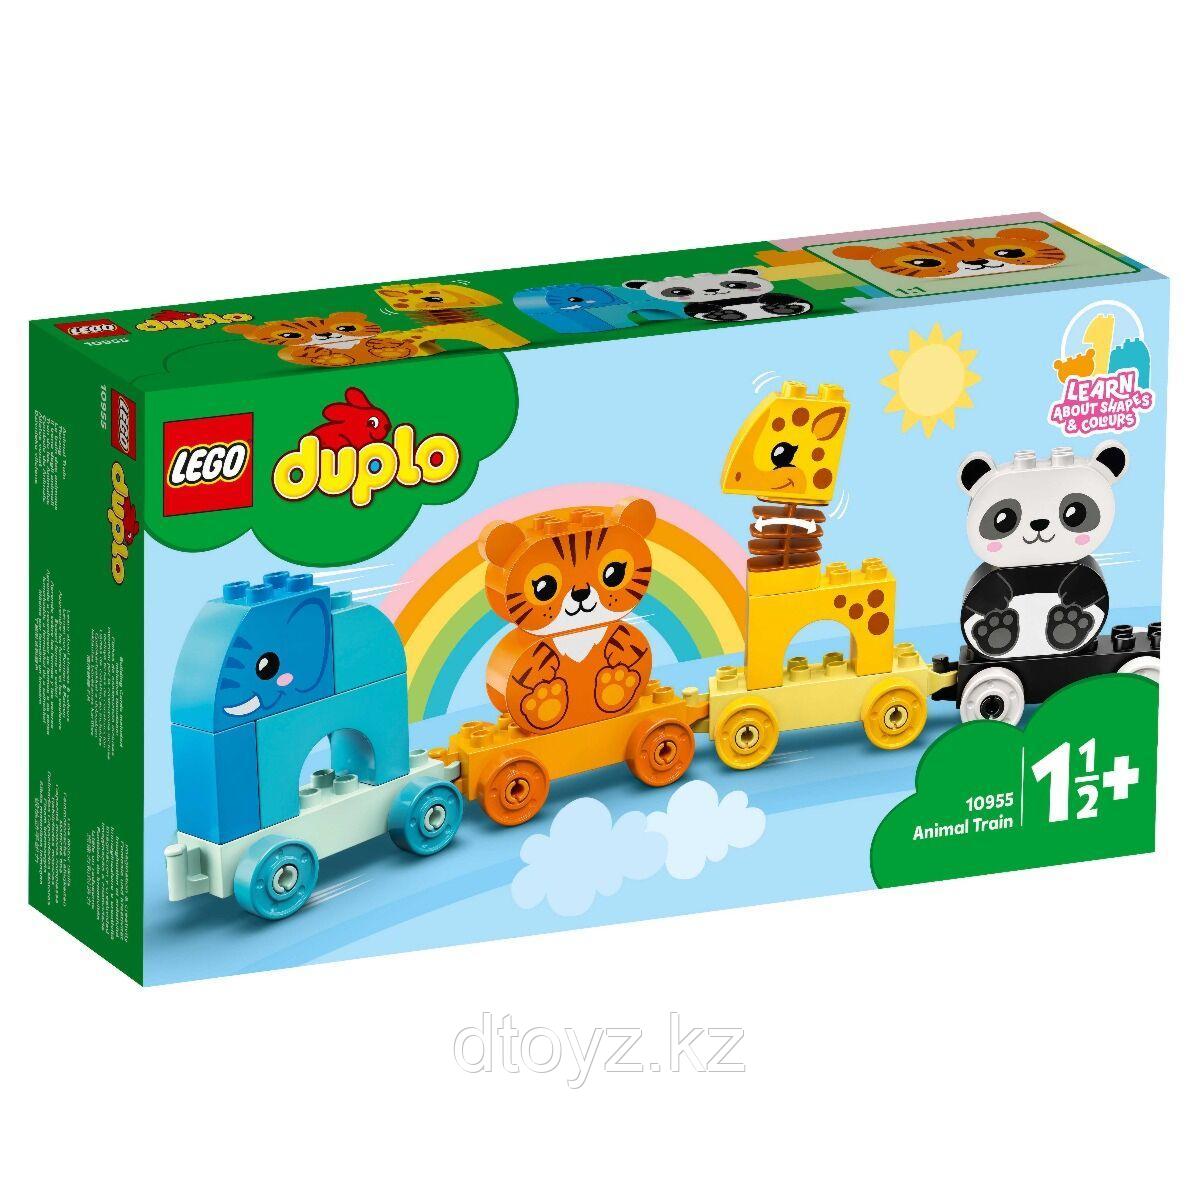 Lego Duplo My First Поезд для животных 10955